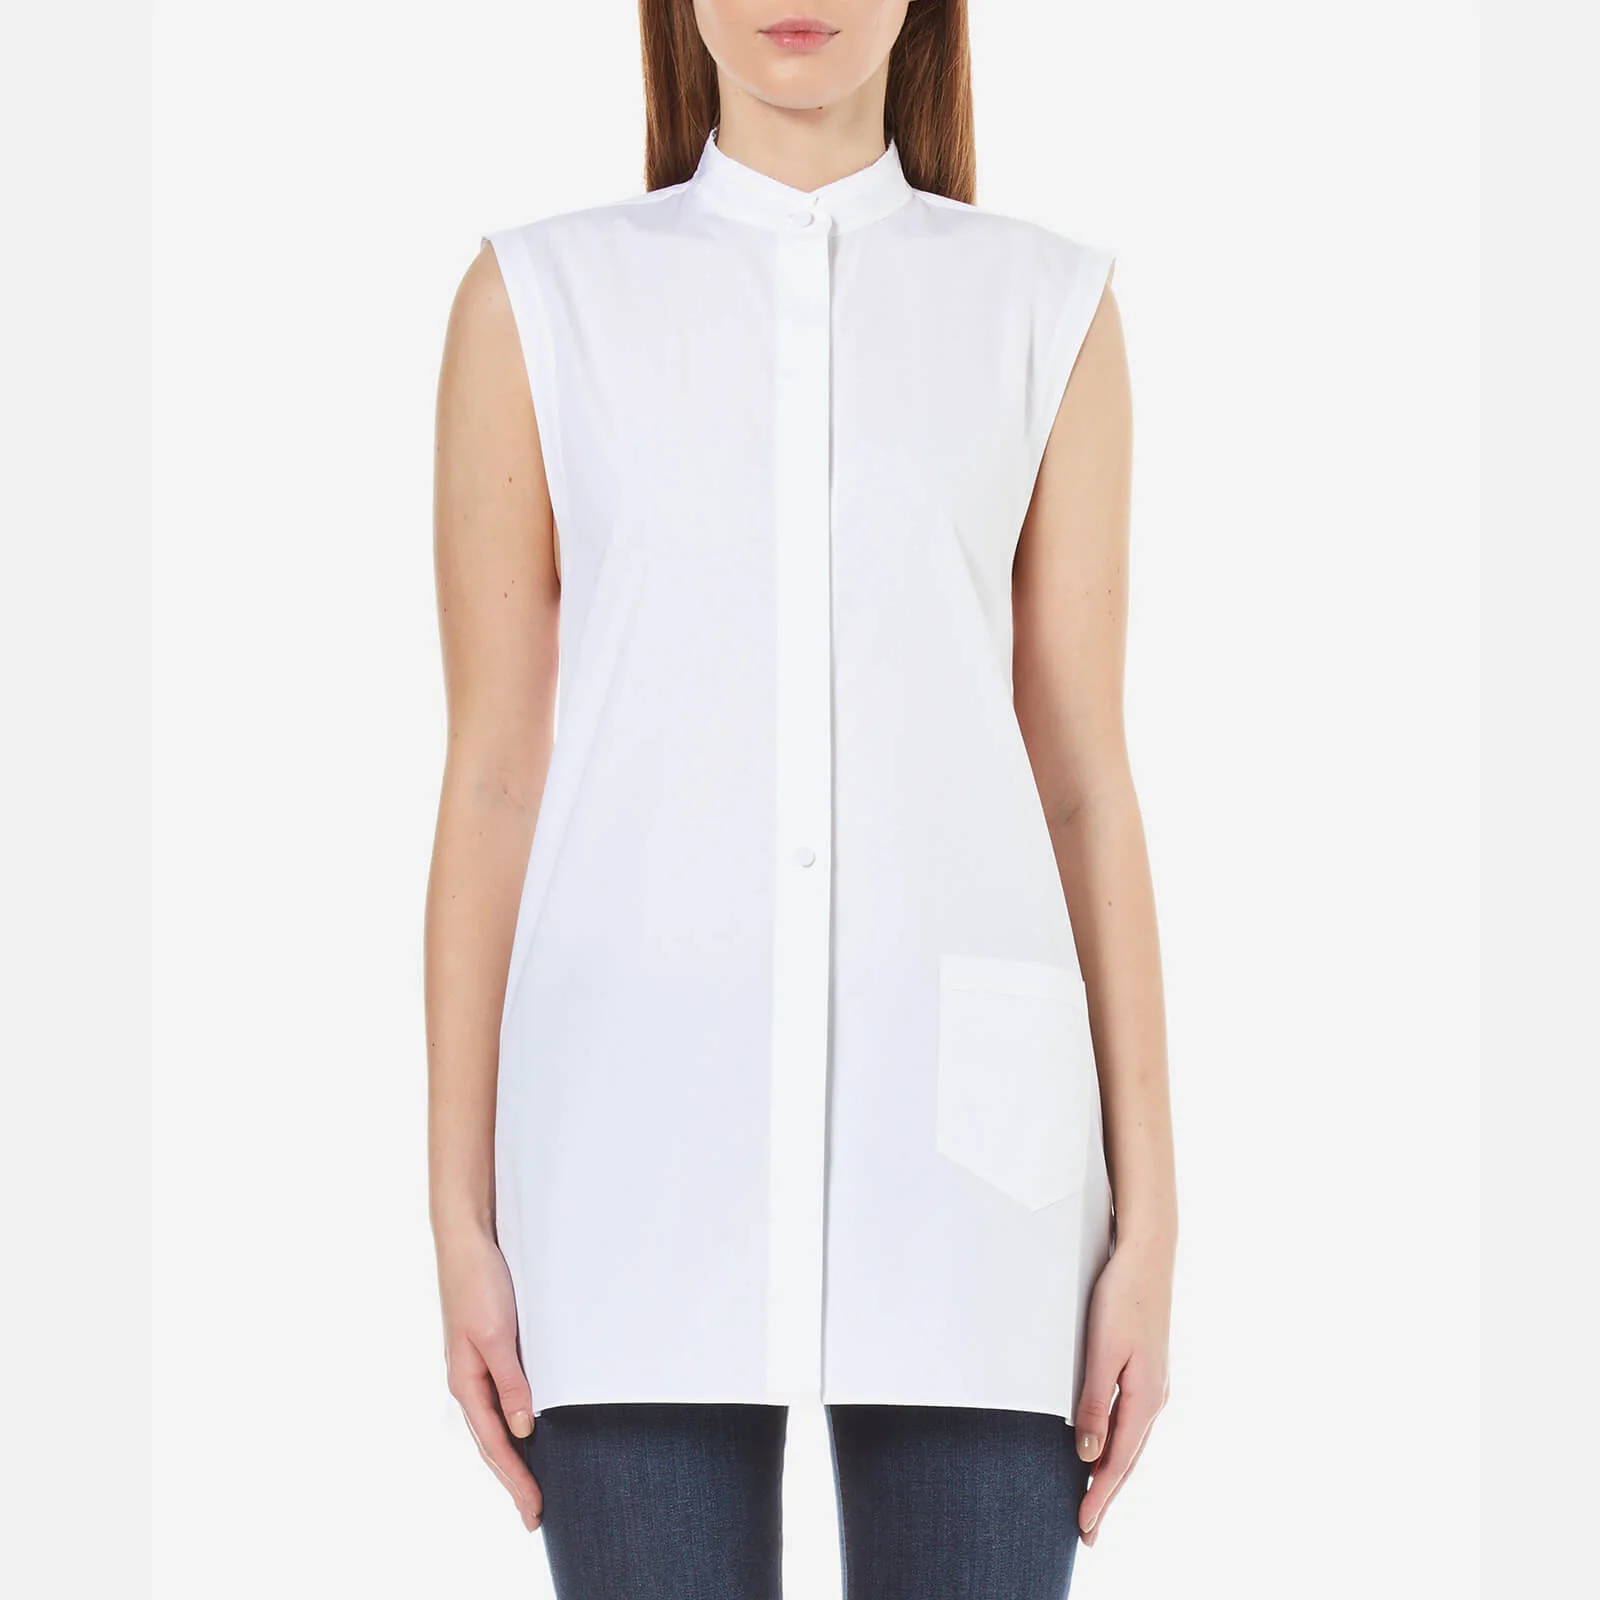 Helmut Lang Women's Apron Shirt - White Image 1